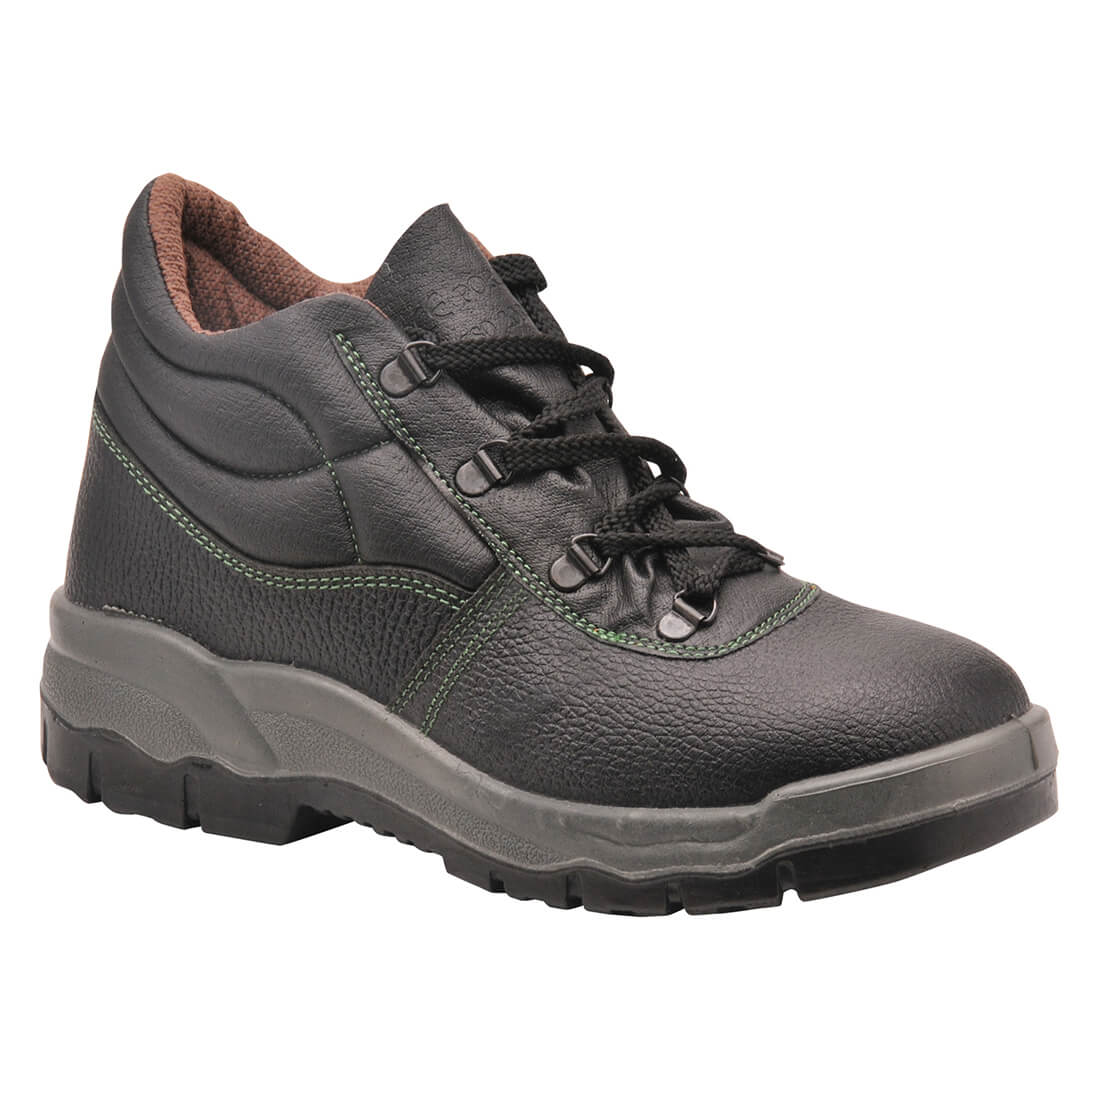 Portwest Steelite Steel Toe Cap Safety Boots Black Size 10